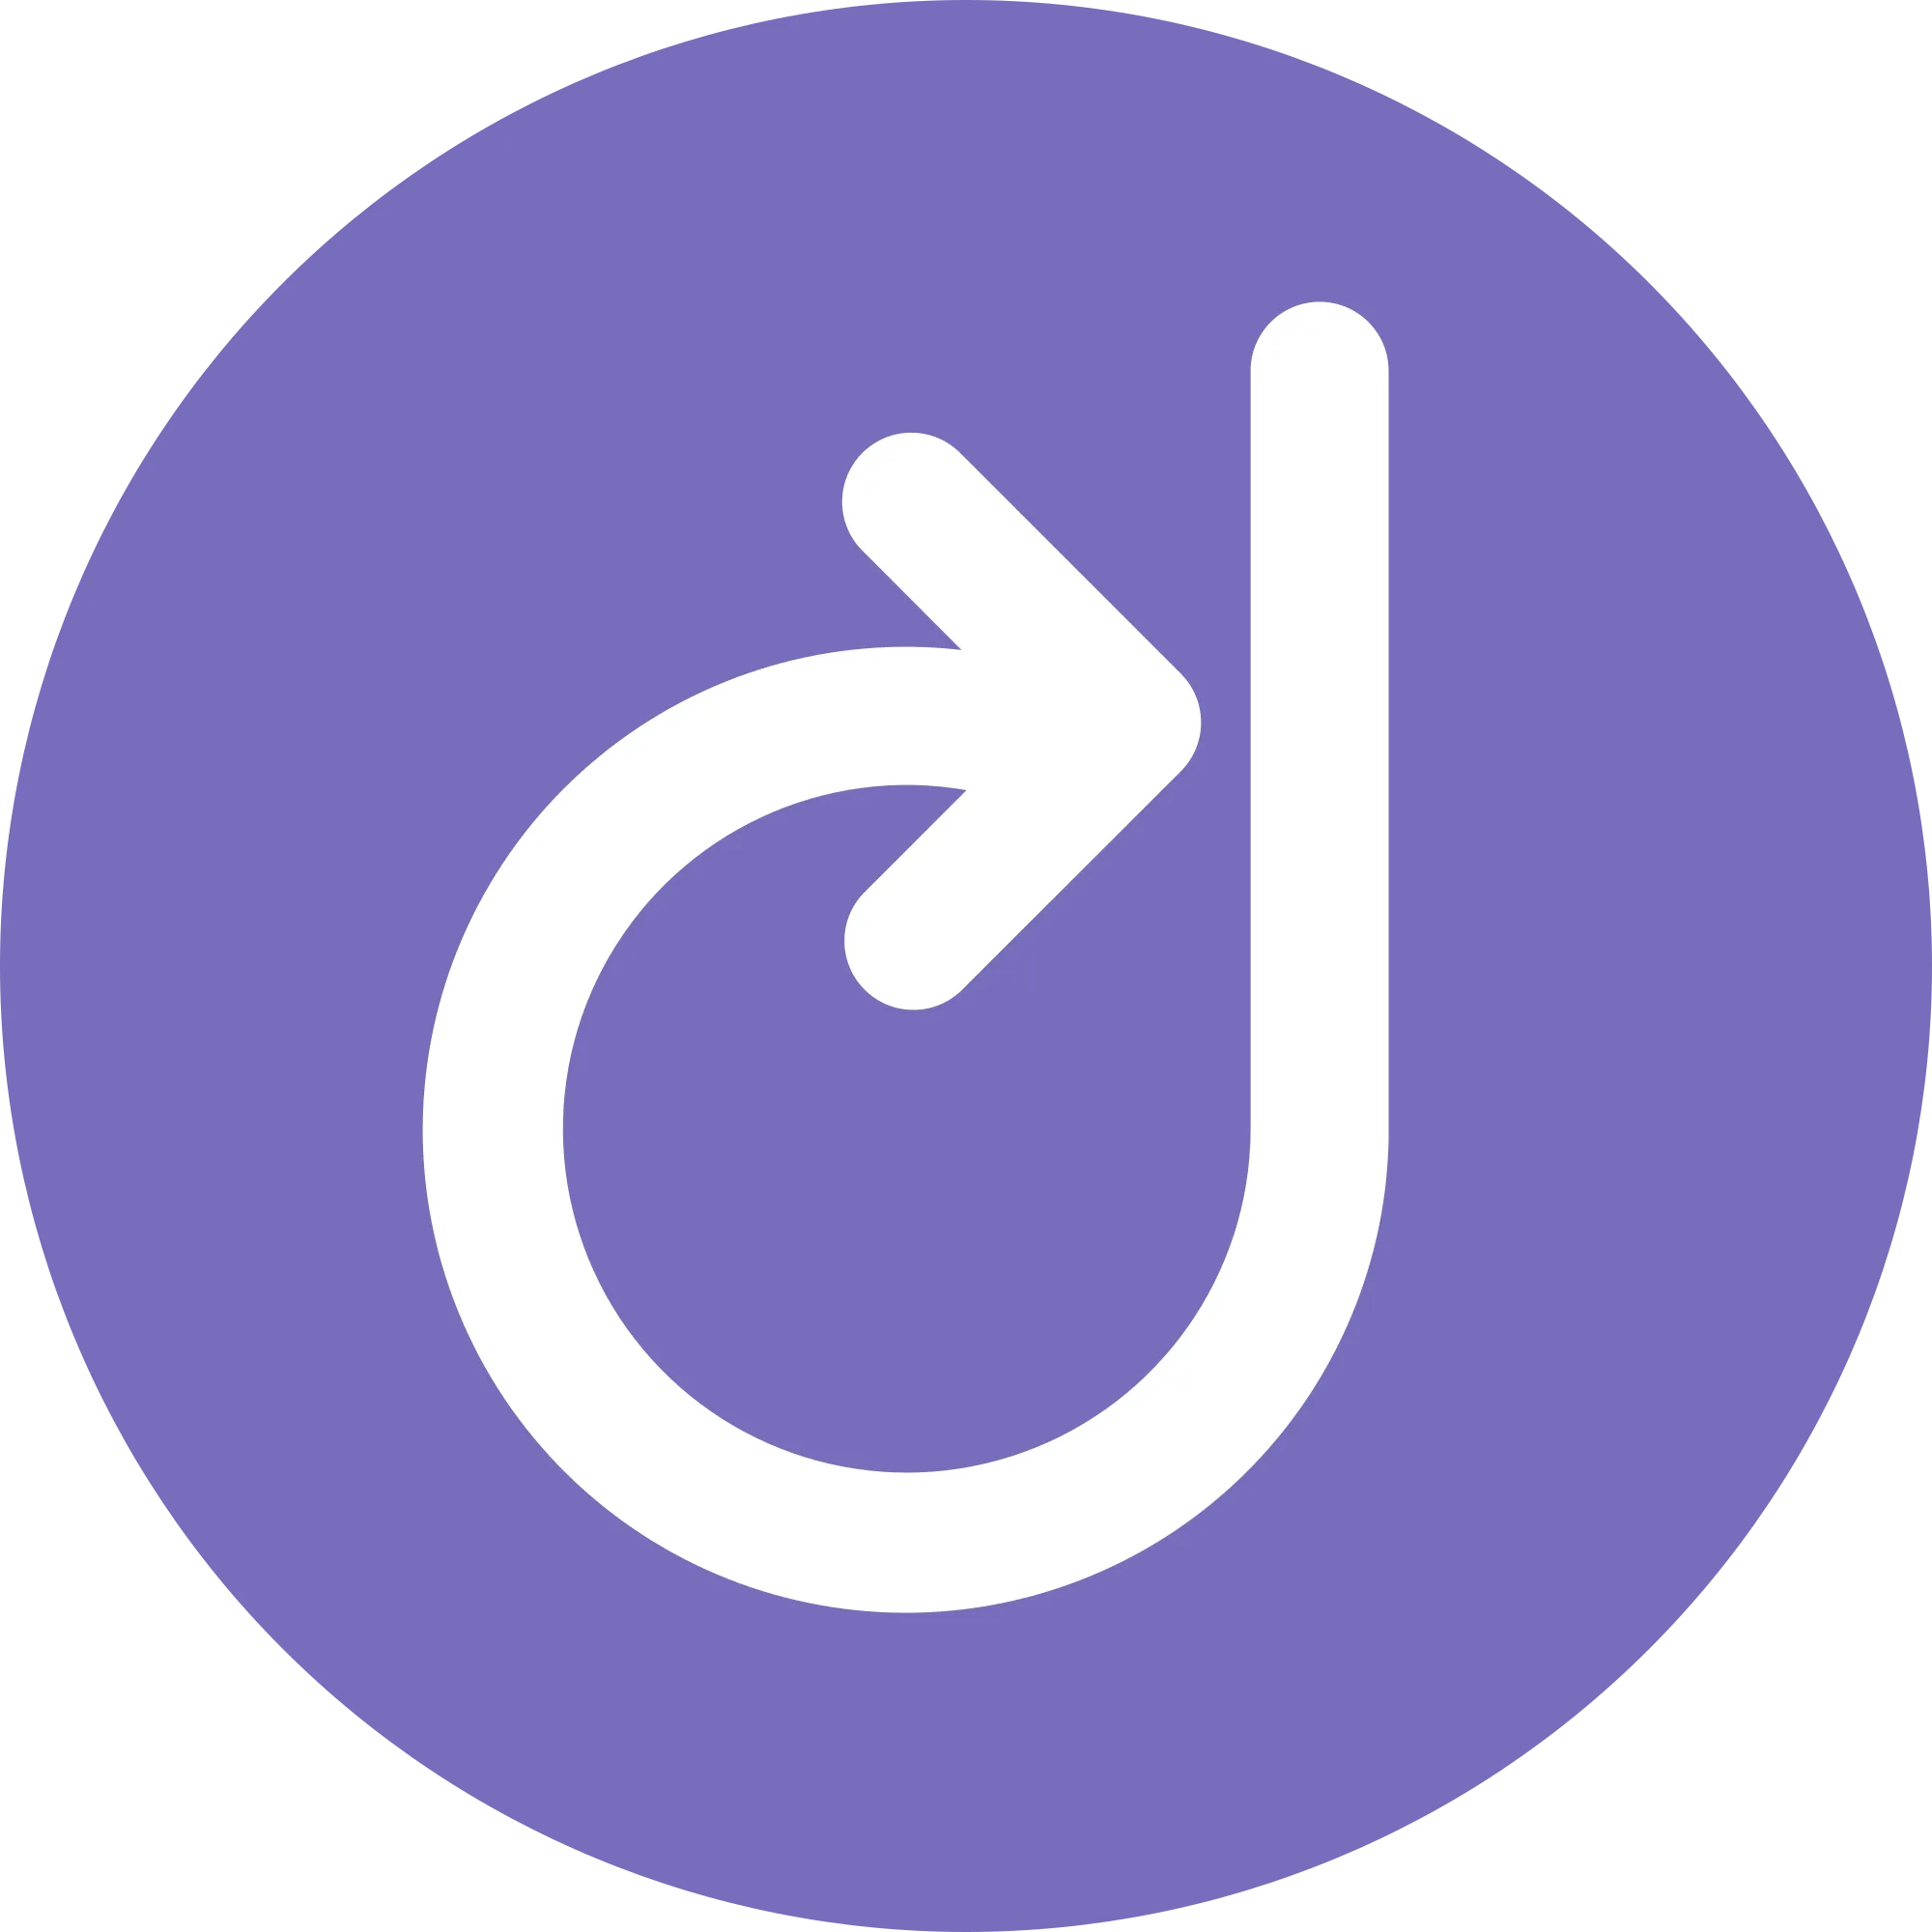 Dock (DOCK) logo